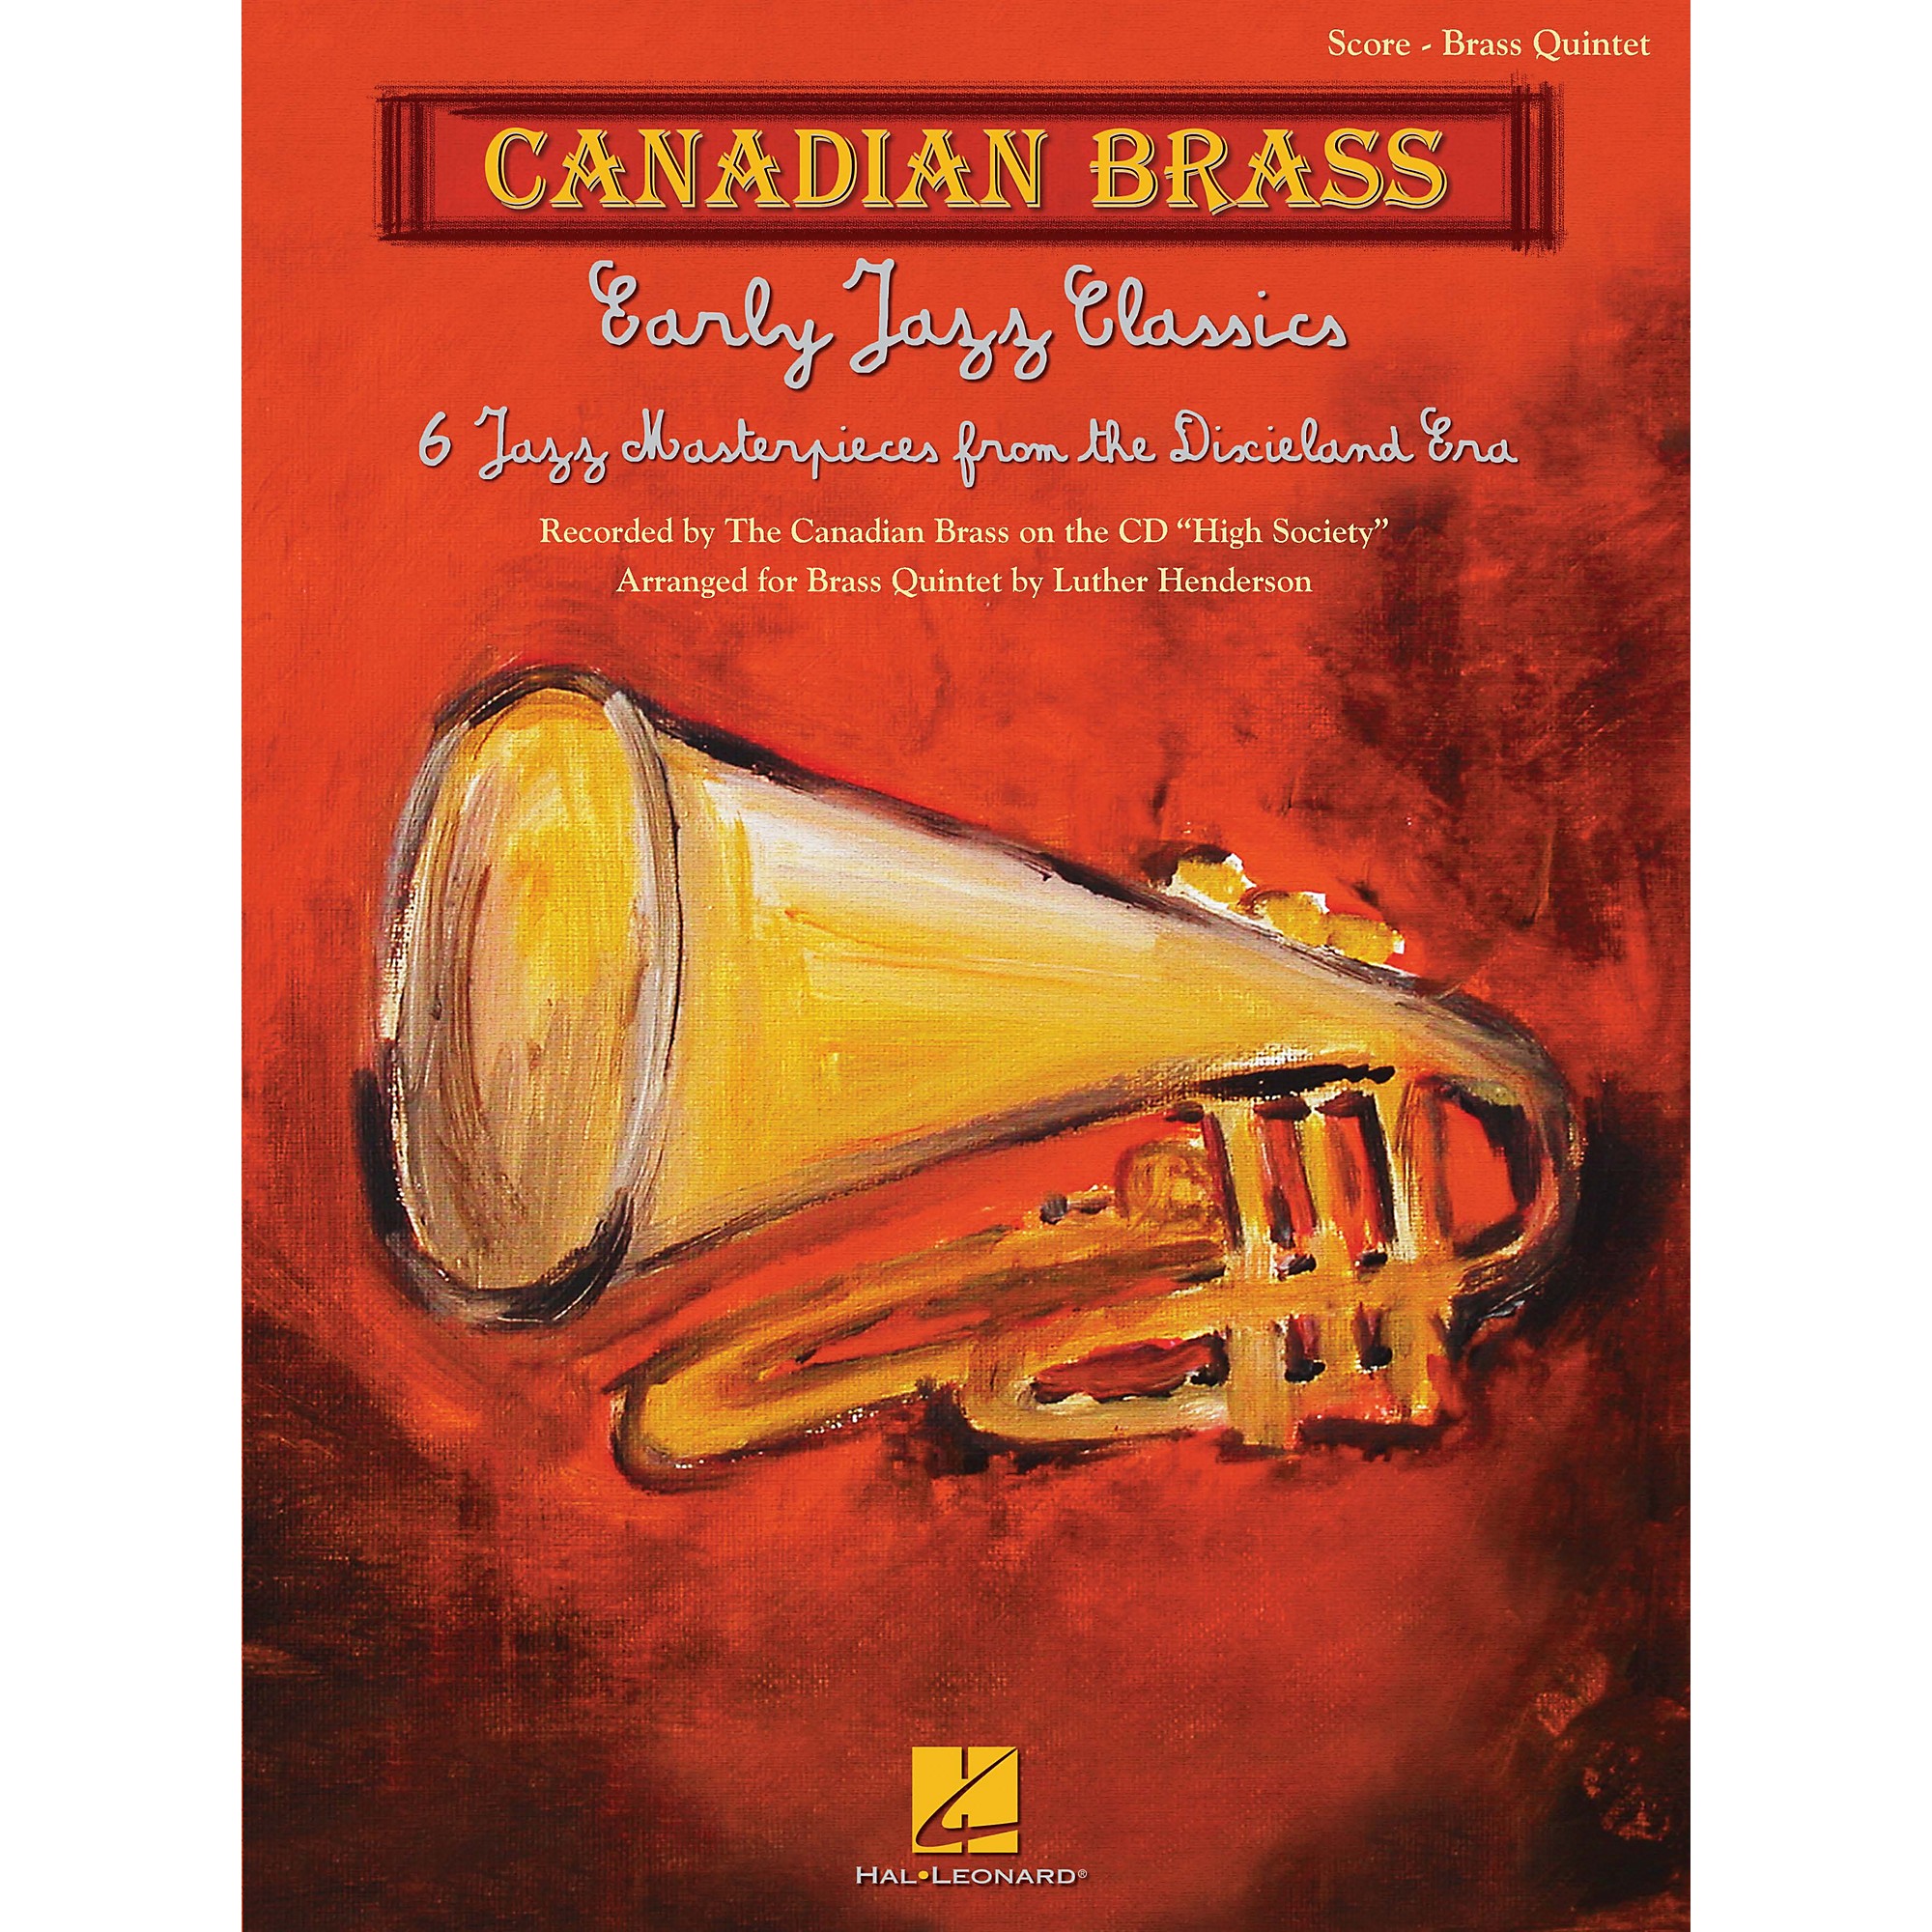 Canadian Brass Early Jazz Classics (Canadian Brass Quintets Score